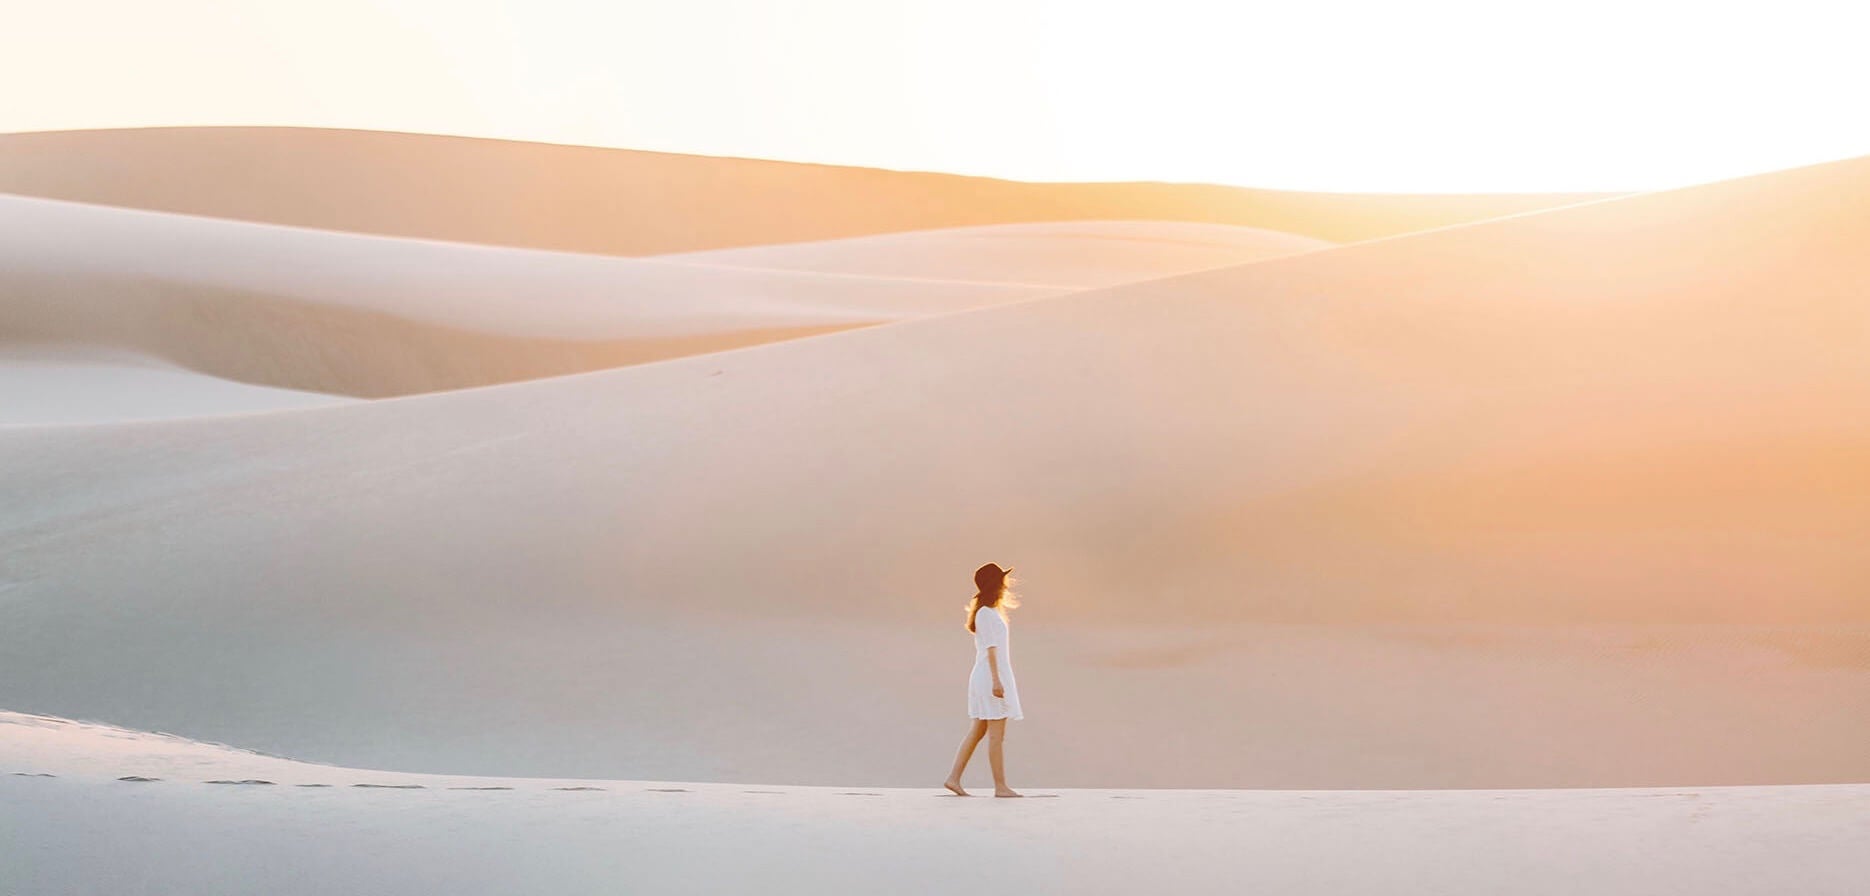 Emilie Ristevski photo of woman walking across sand dunes